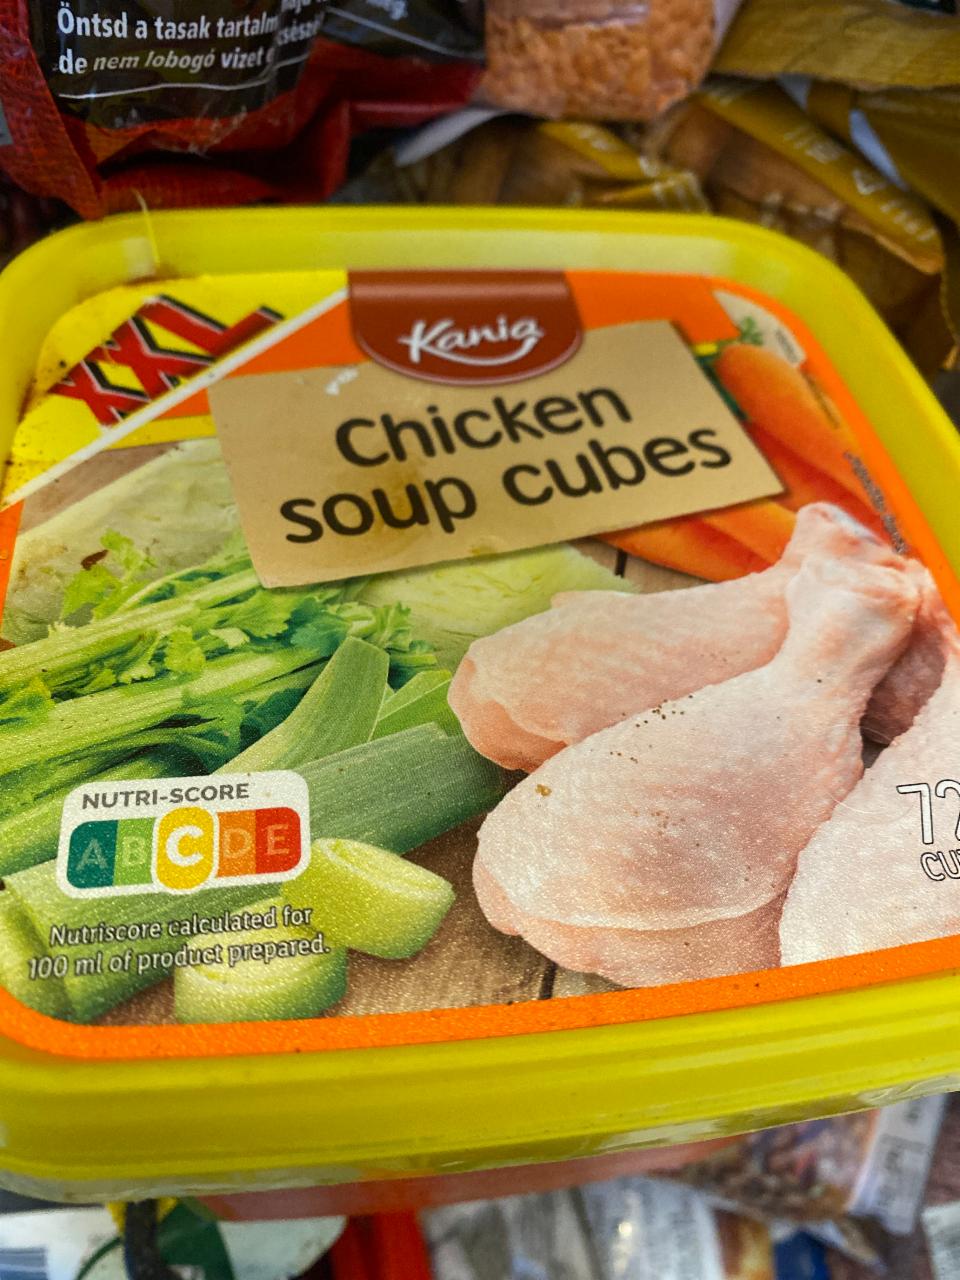 Képek - Chicken soup cubes Kania